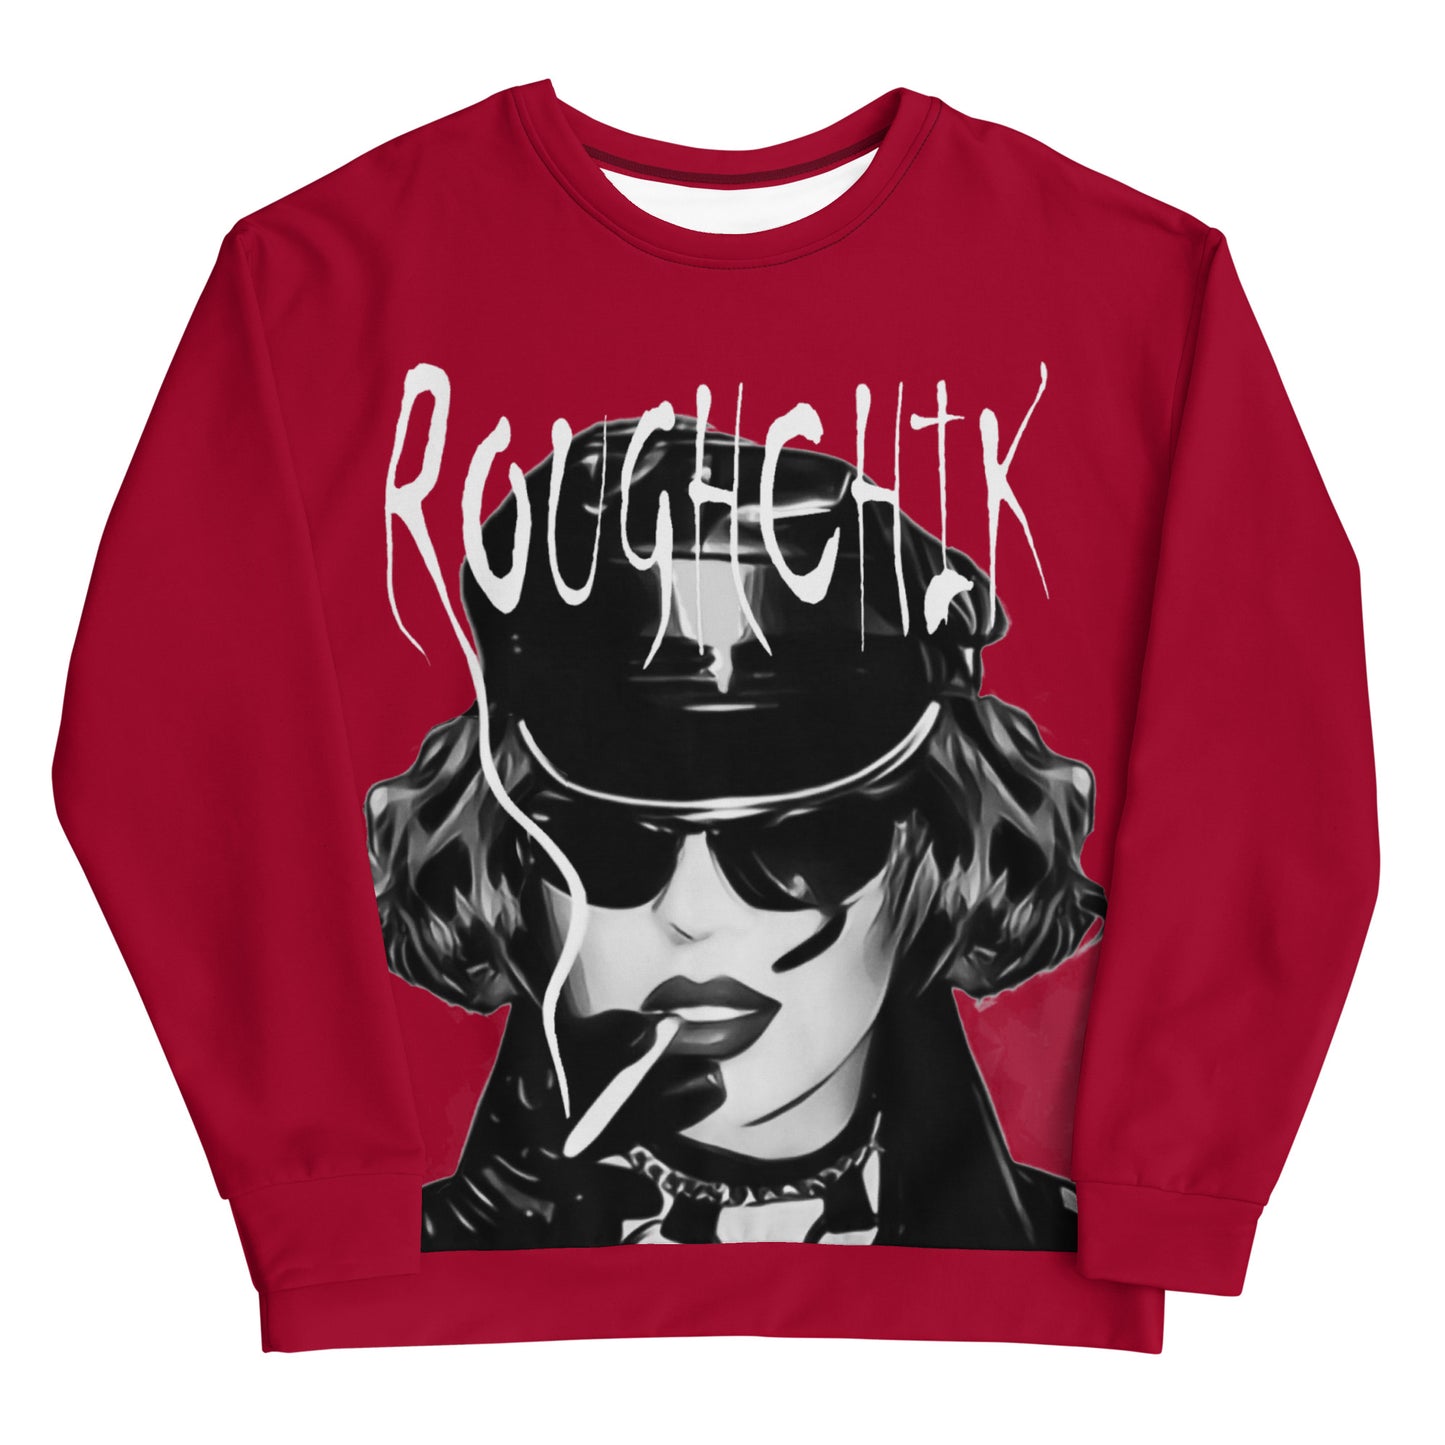 ROUGHCHIK LOGO Sweatshirt - RED